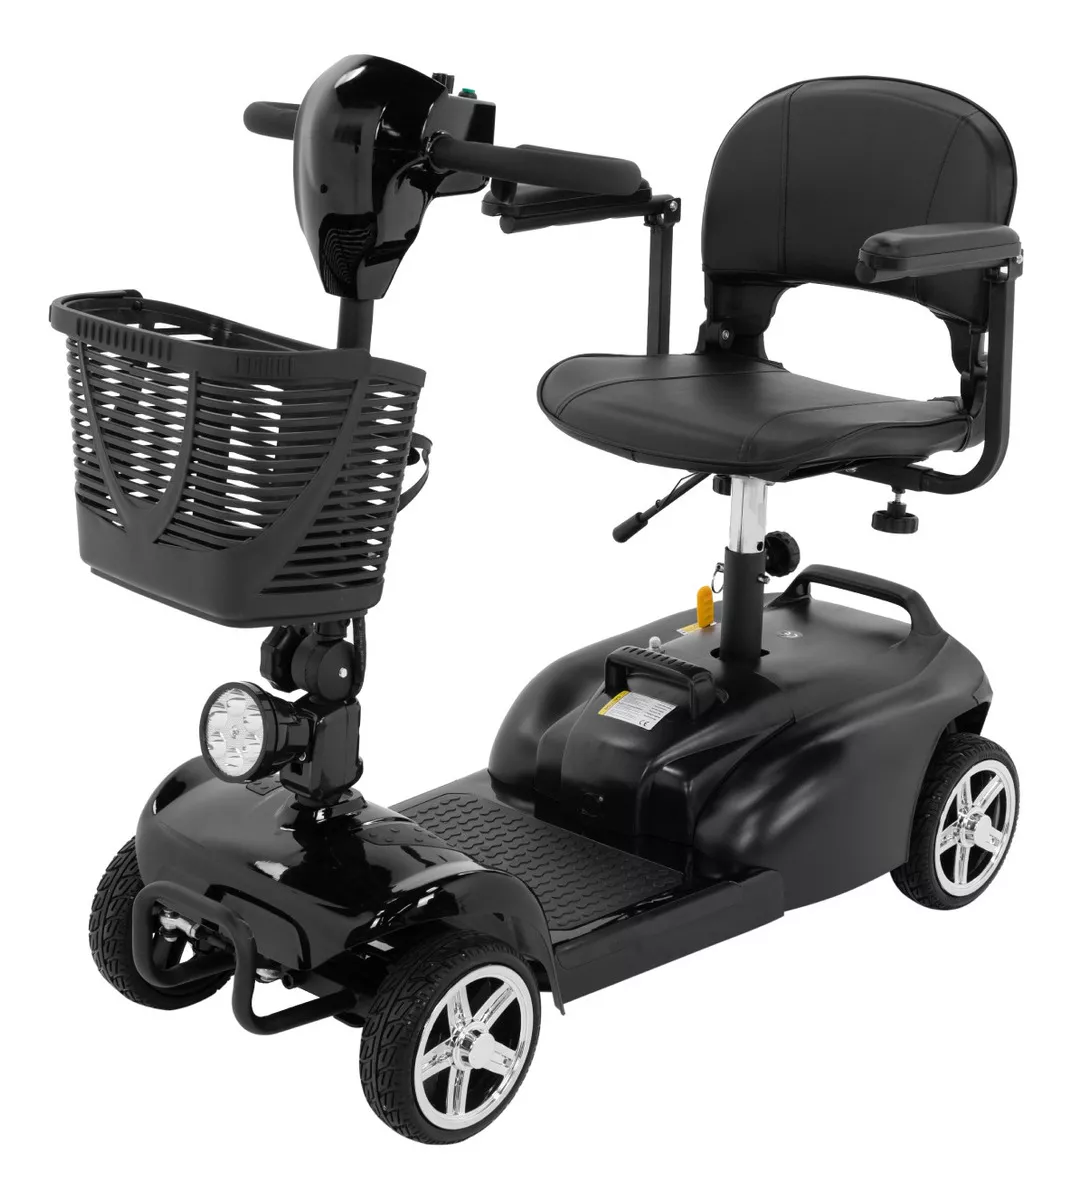 Segunda imagen para búsqueda de scooter electrico para discapacitados